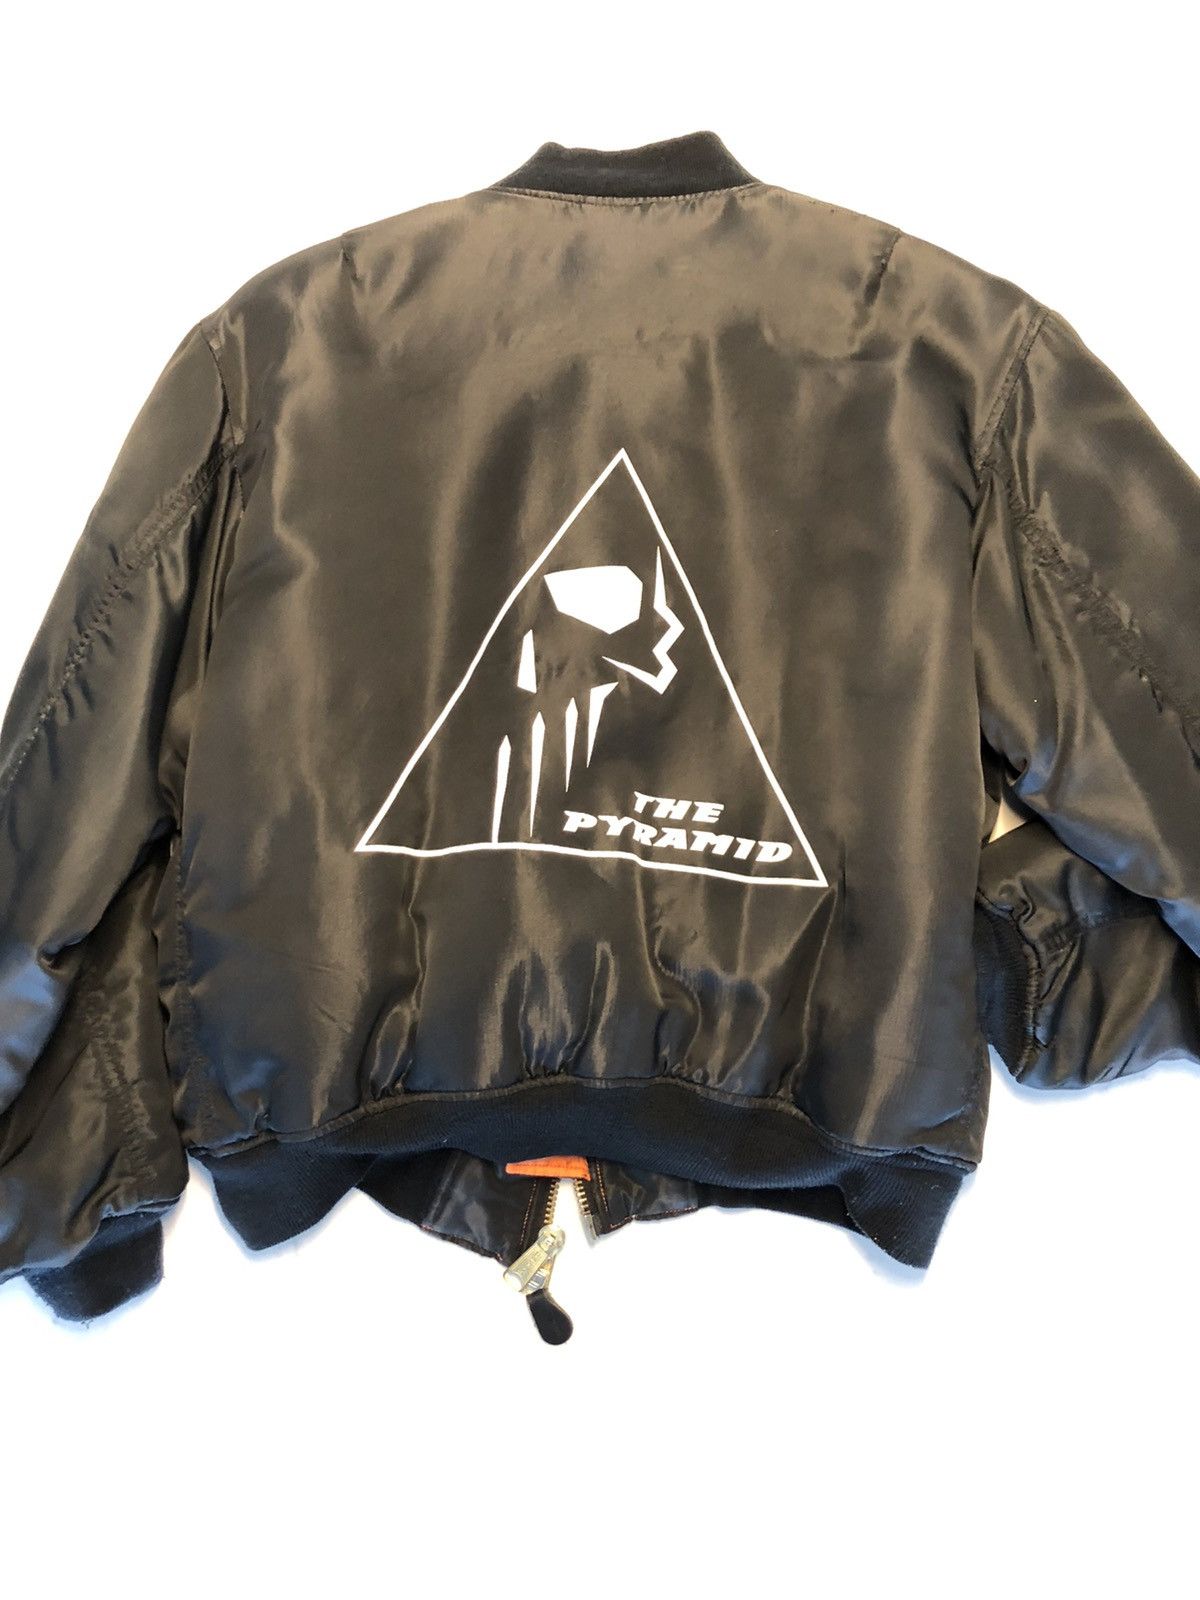 Raf Simons SS00 Summa Cum Laude The Pyramid bomber jacket | Grailed